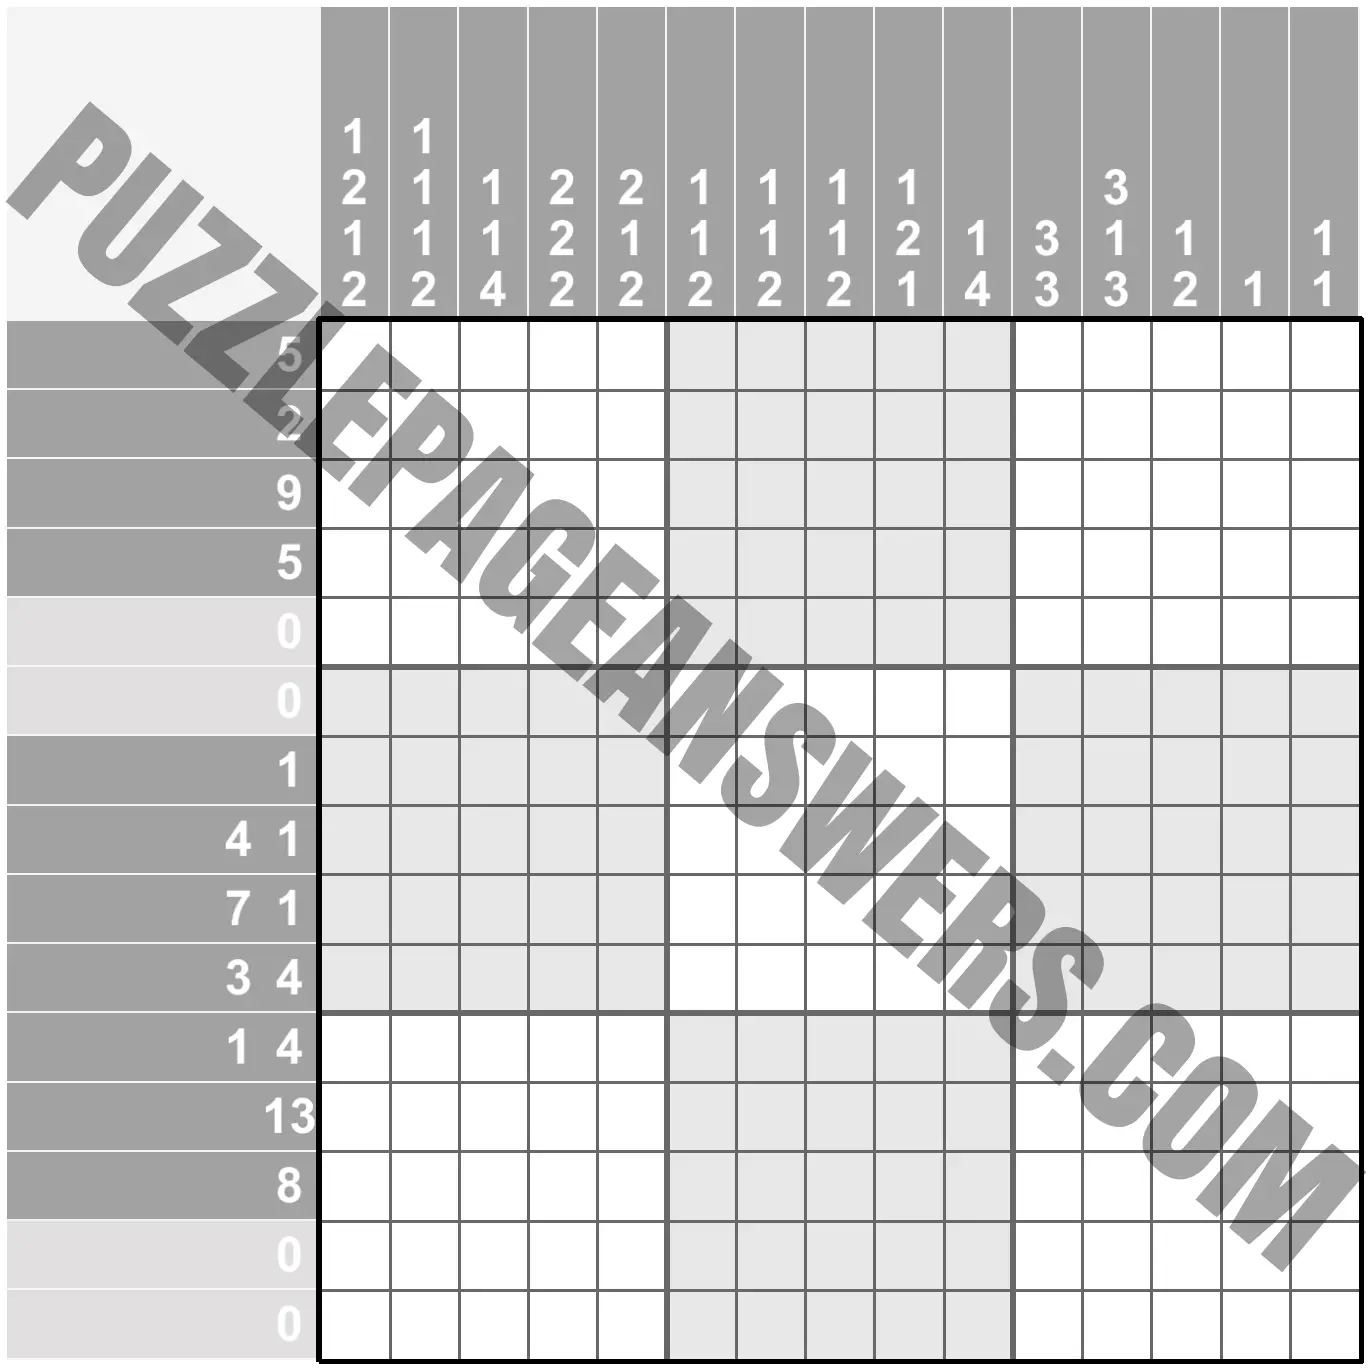 Puzzle Page Picture Cross June 23 2019 PuzzlePageAnswers com